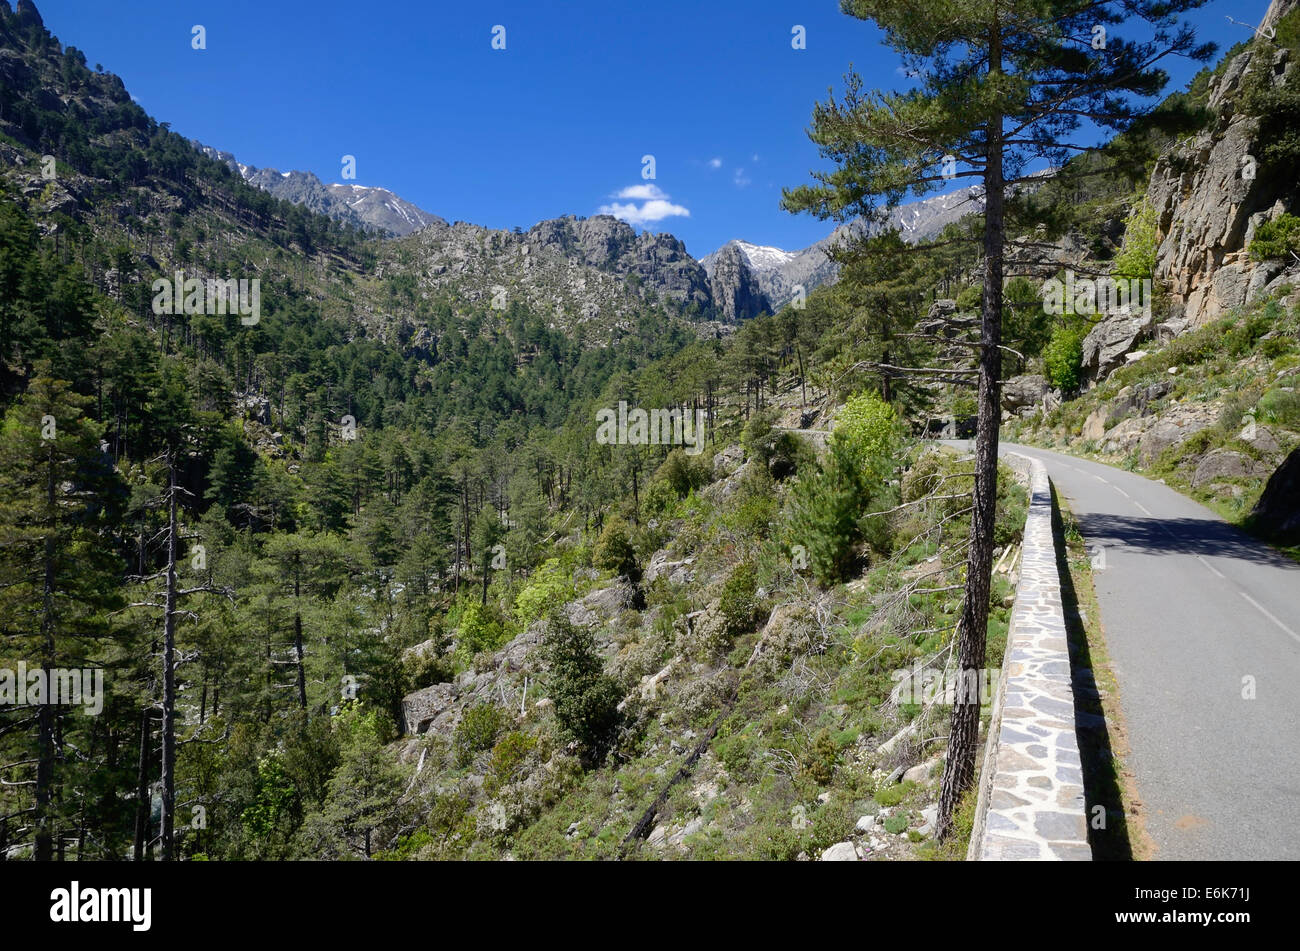 Enge Straße in Restonica Tal, Gorges de la Restonica, Parc naturel régional de Corse, in der Nähe von Corte, Korsika, Frankreich Stockfoto